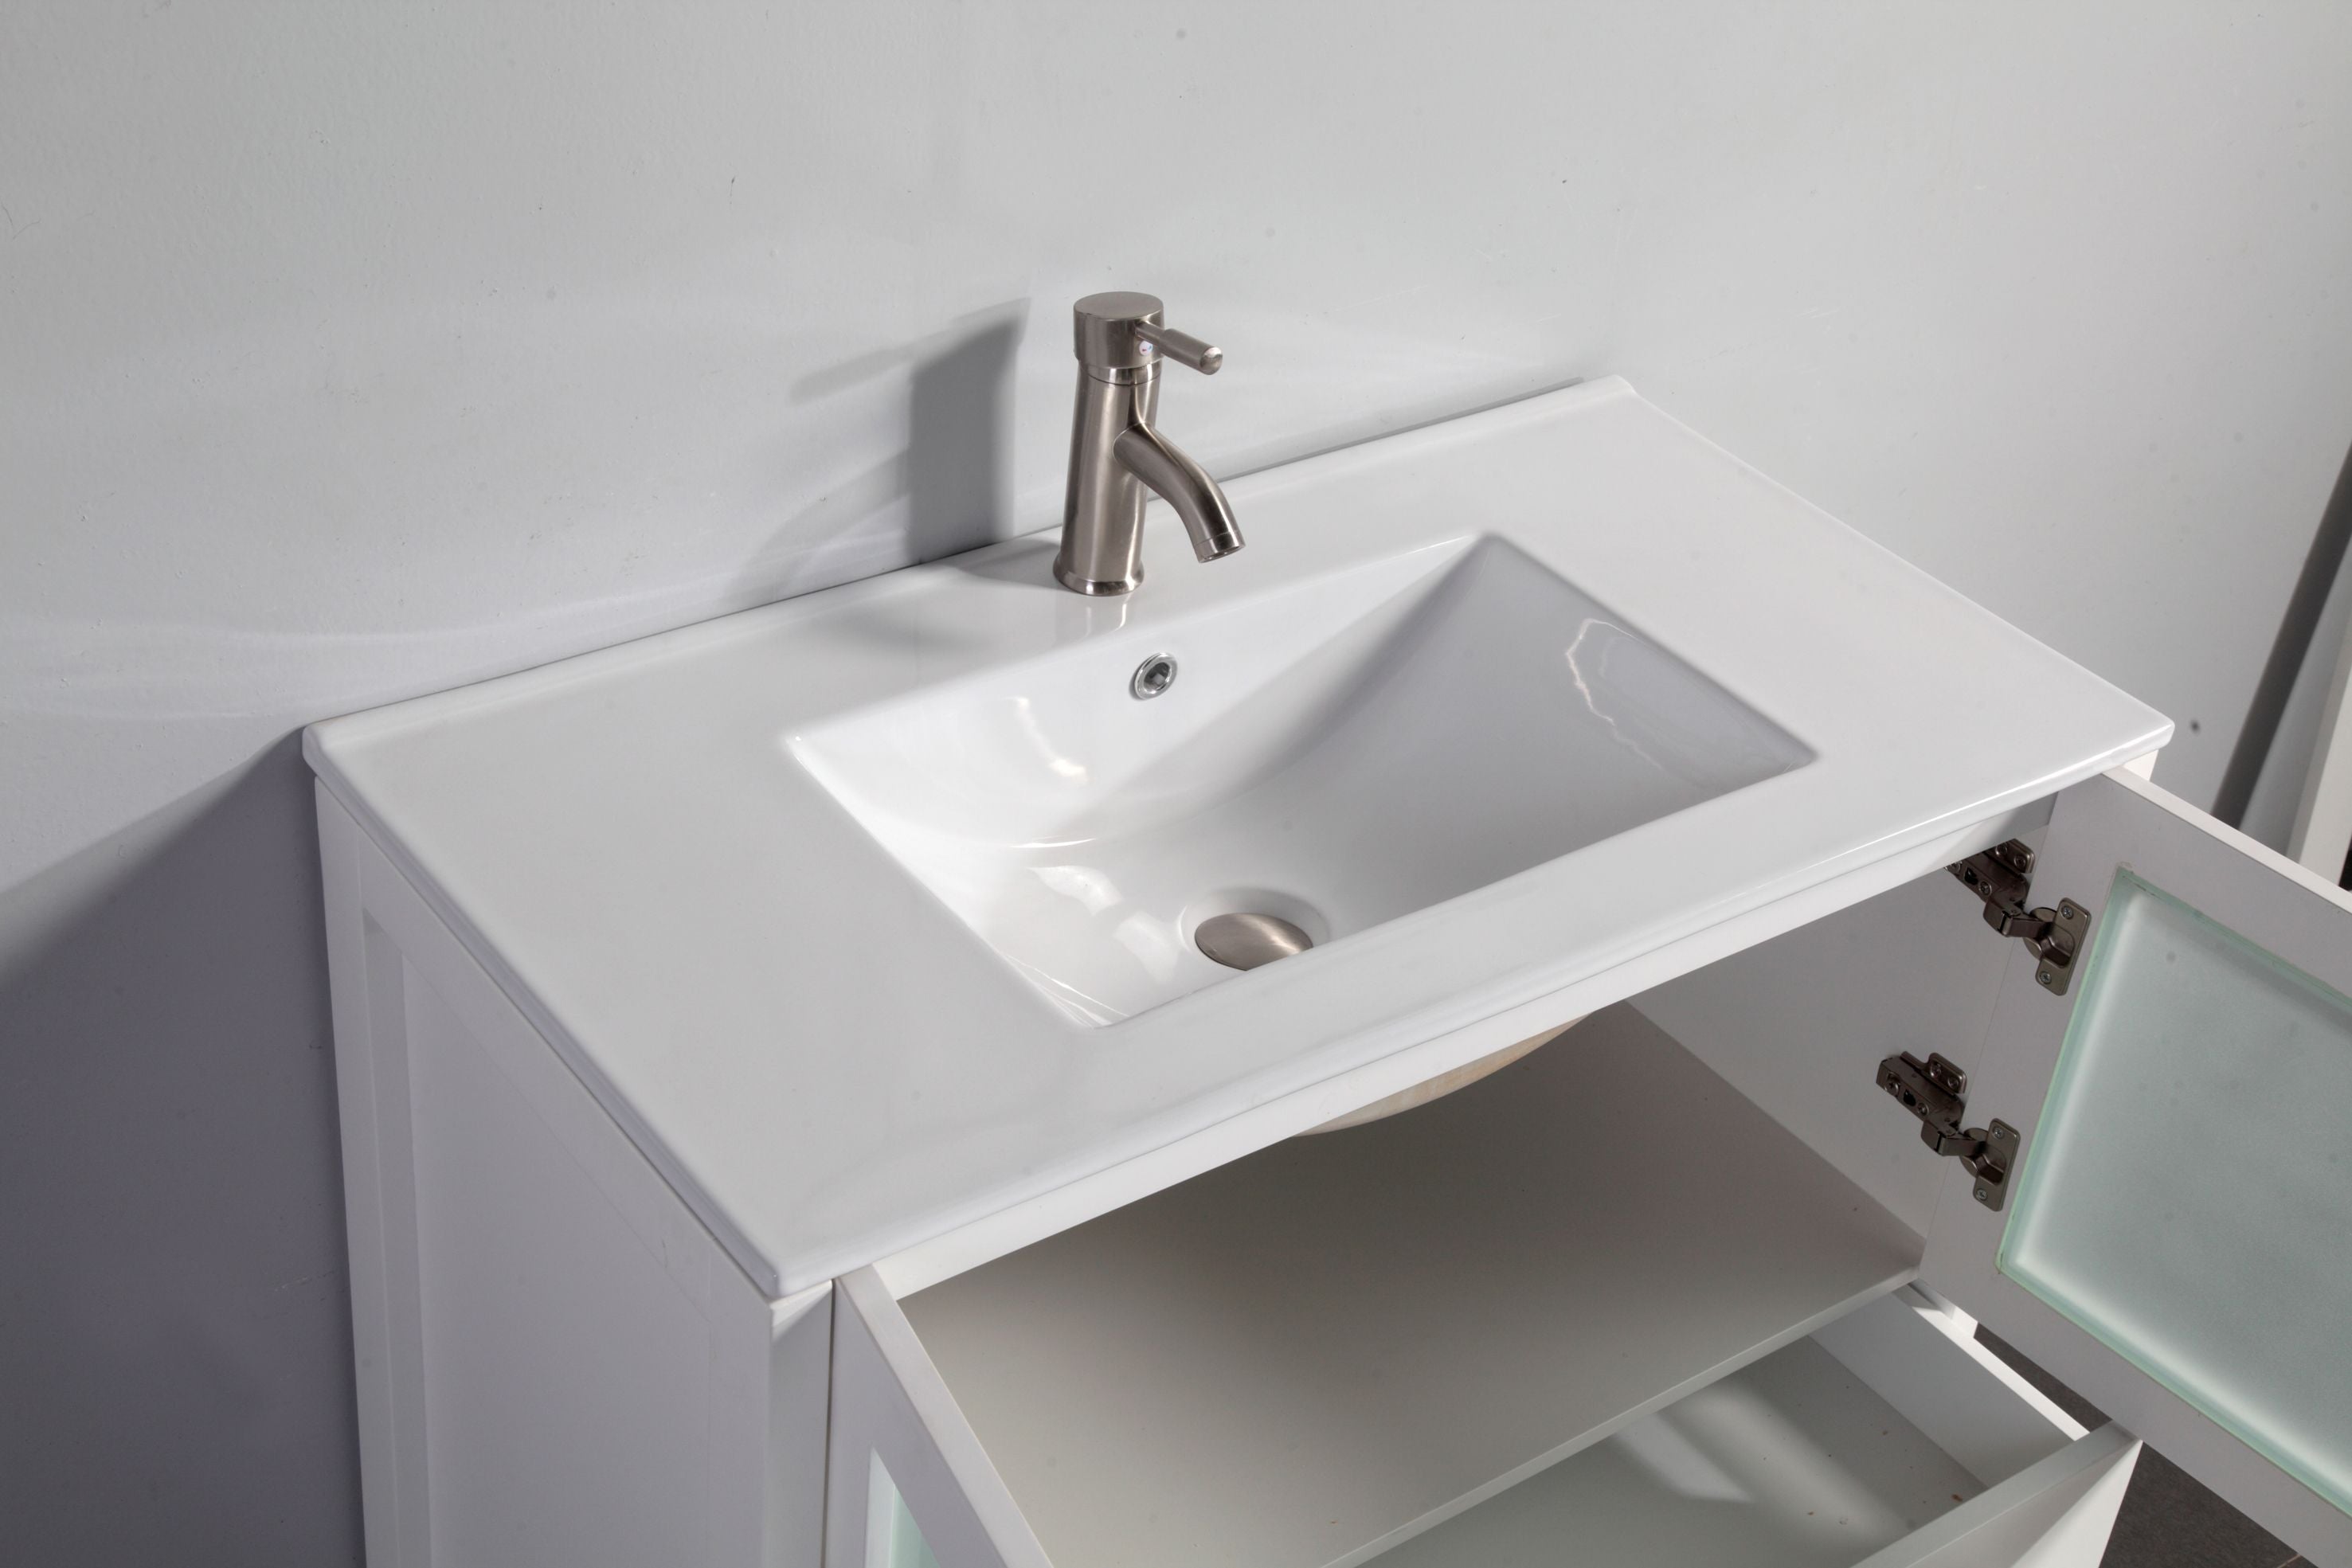 Vanity Art - London 60" Single Sink Bathroom Vanity Set with Sink and Mirror - 2 Side Cabinets - Bhdepot 